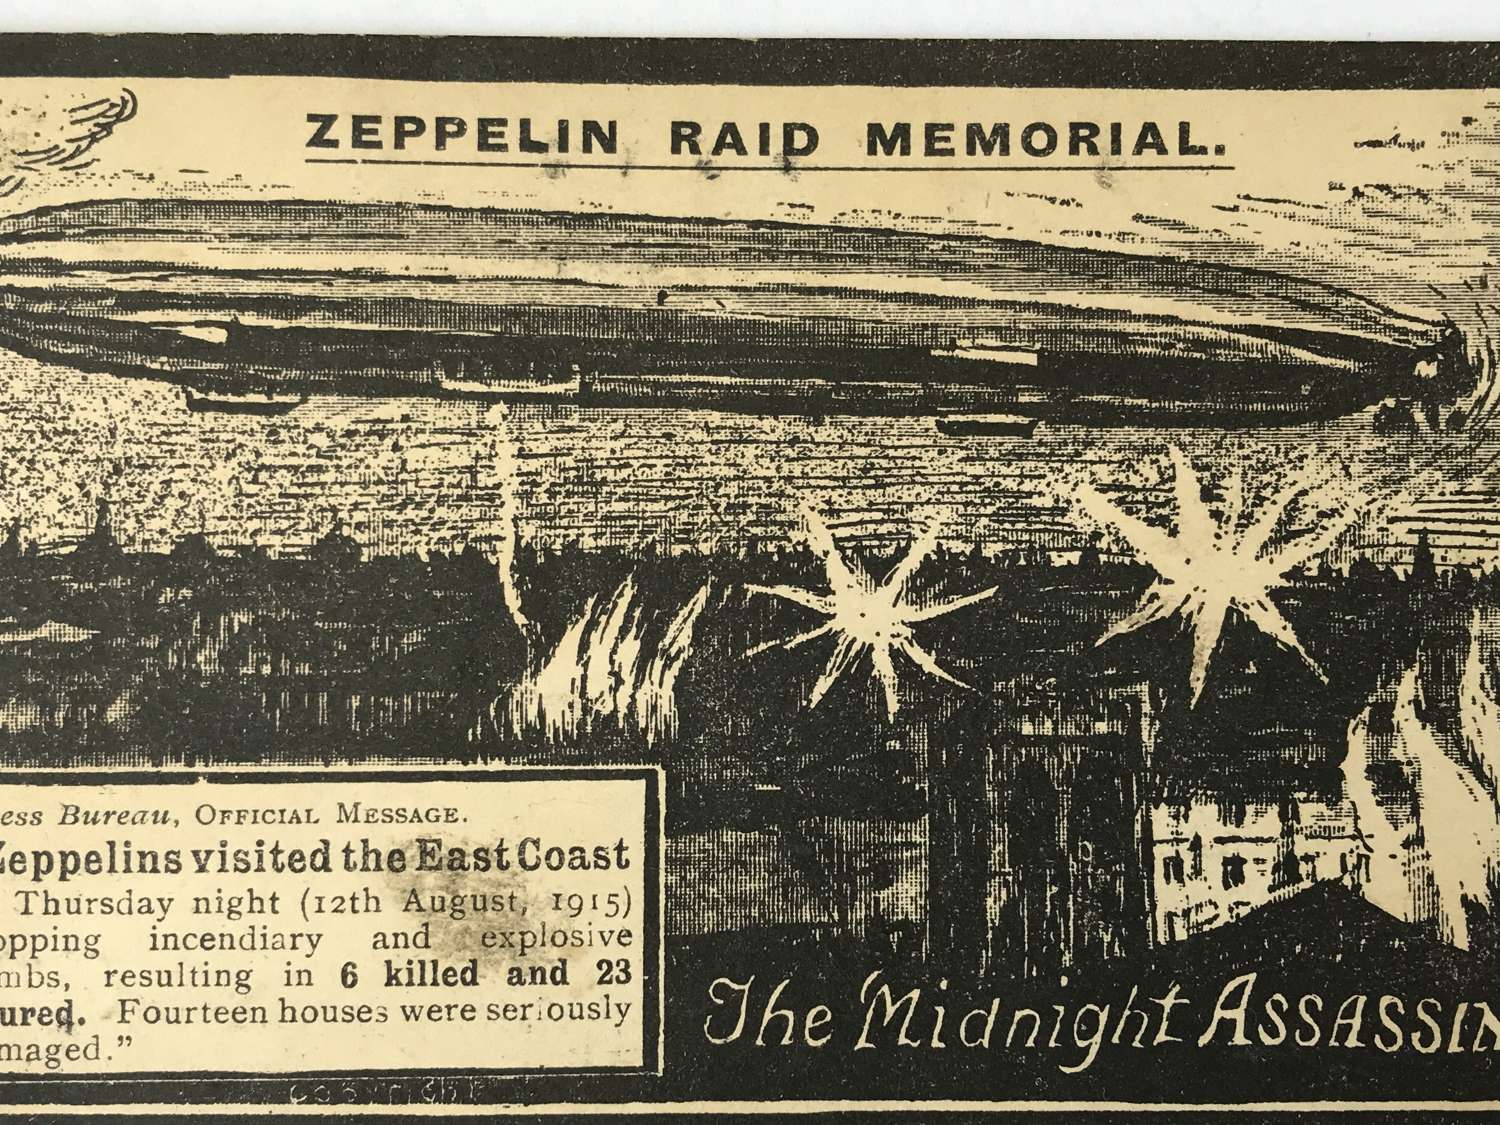 Zeppelin Raid memorial postcard 1916 (The midnight assassins)